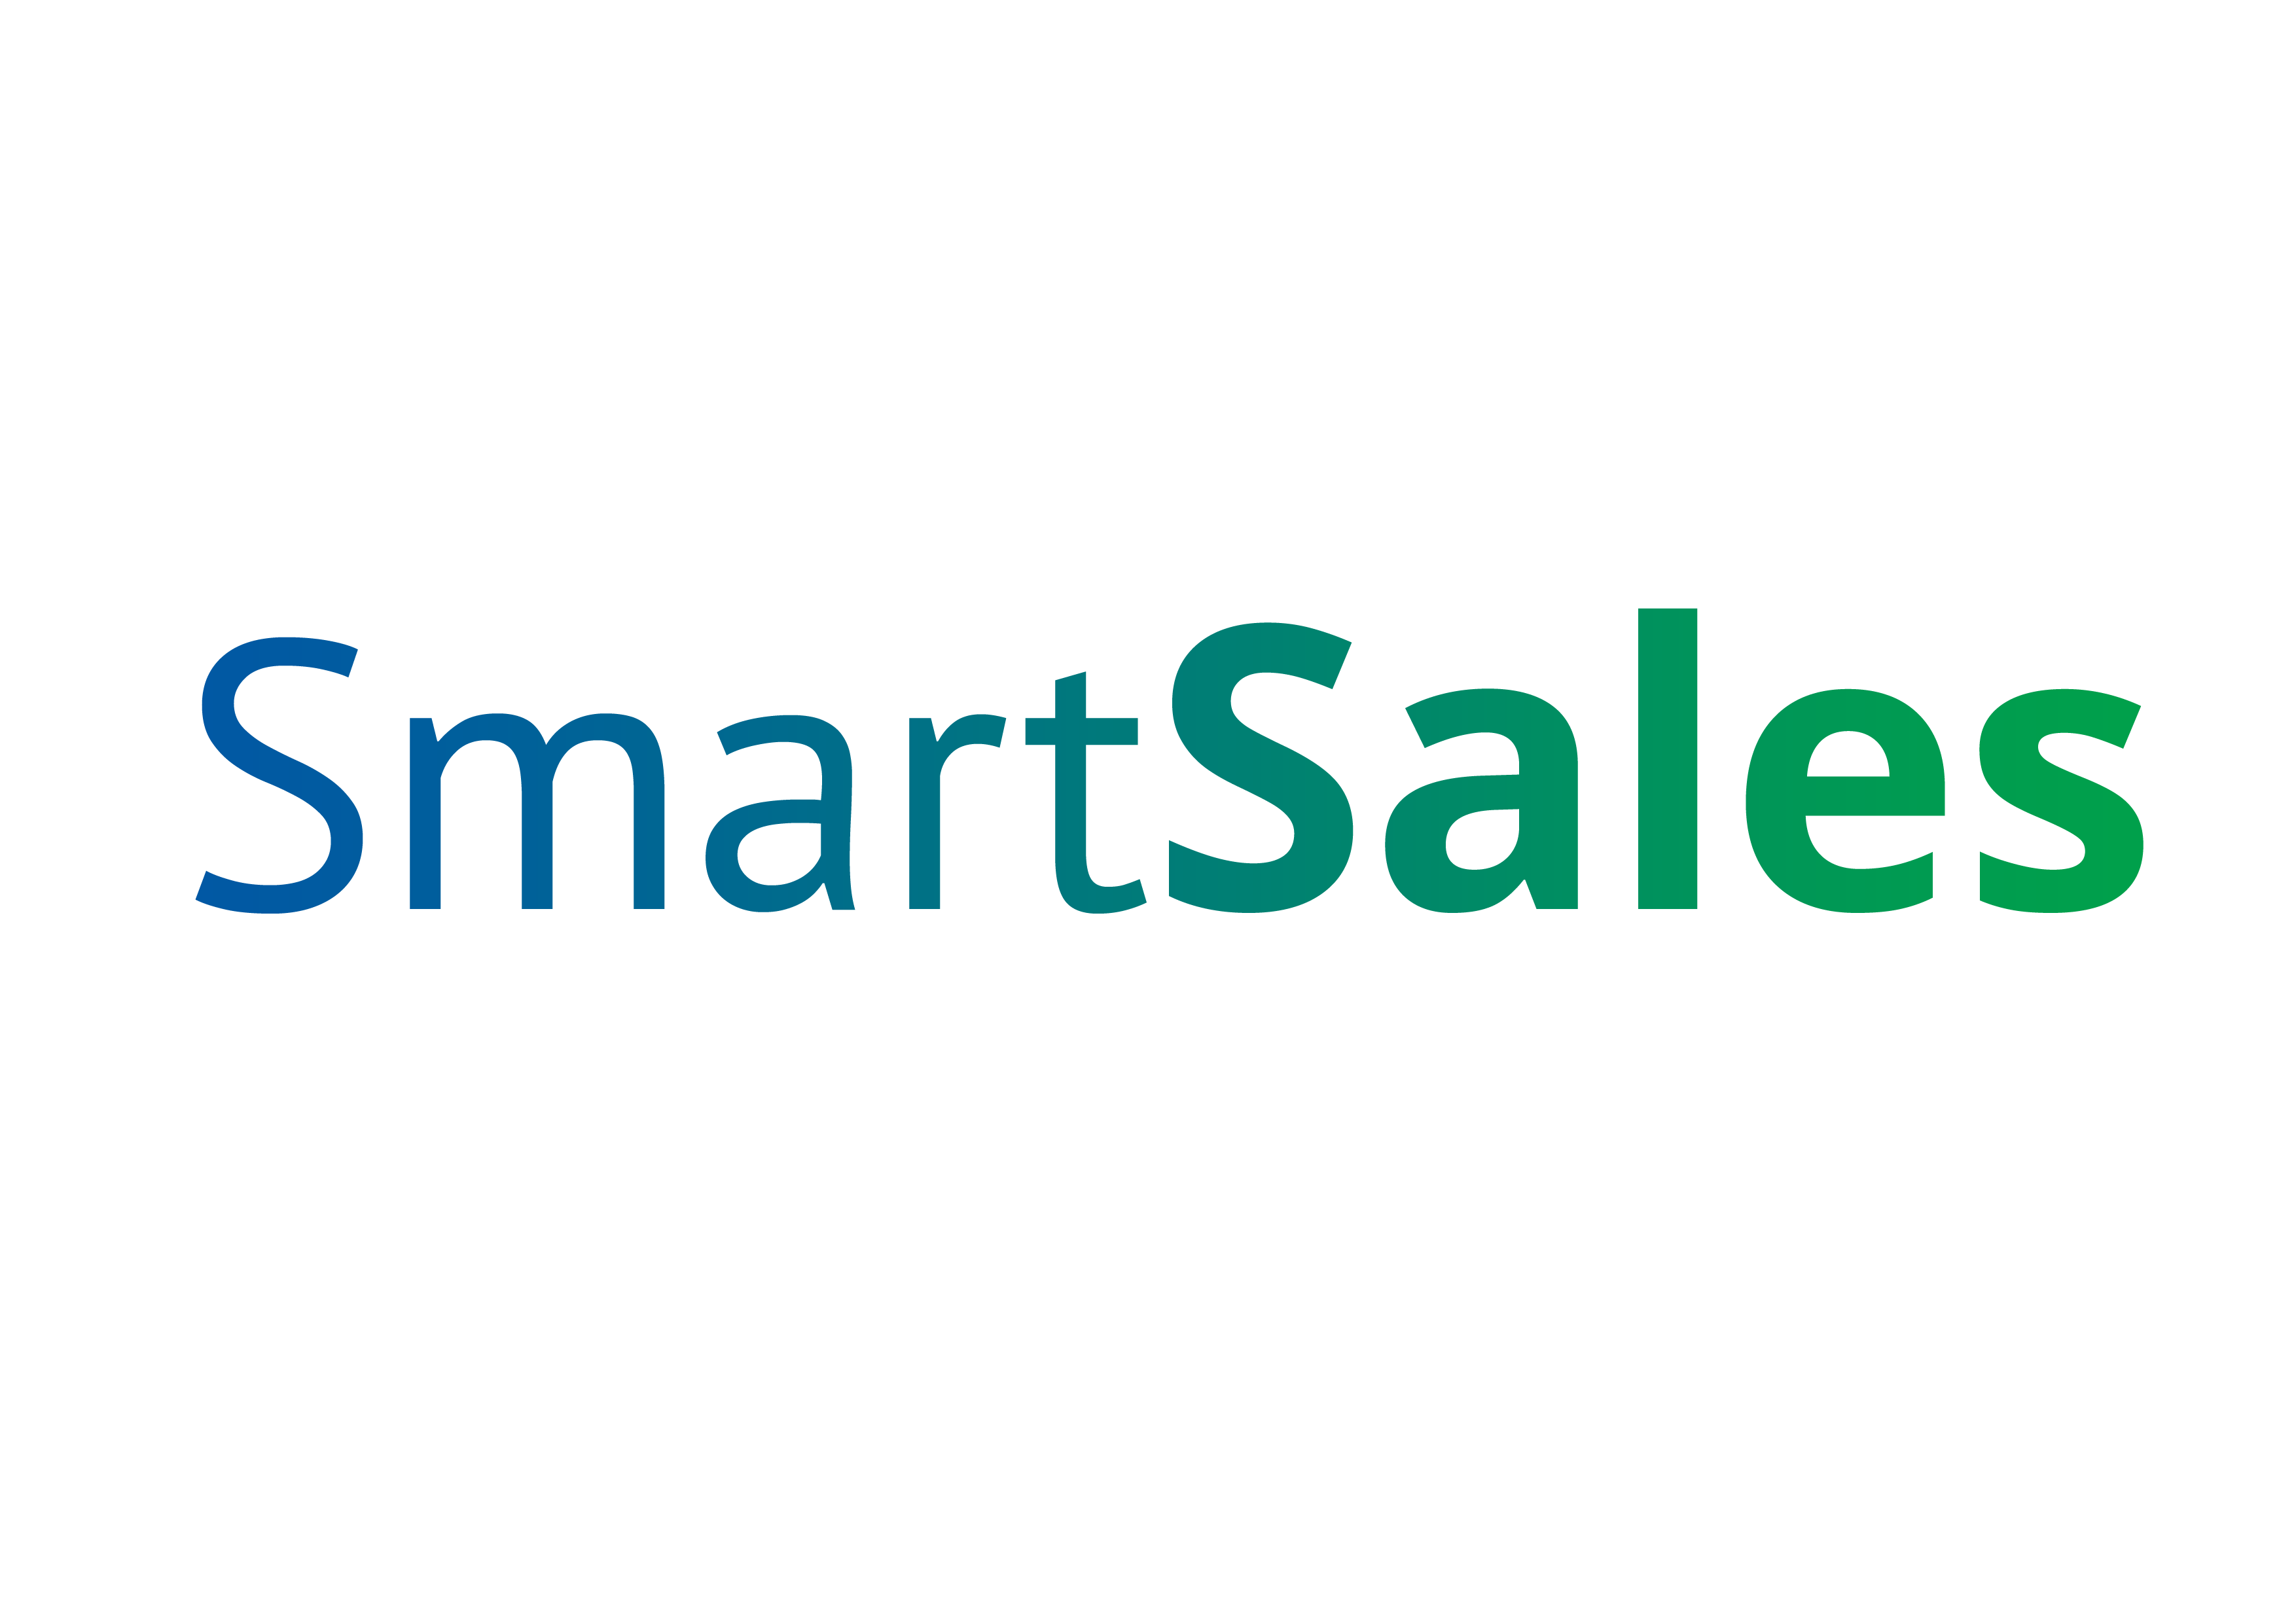 Smart sale. "Smart sales leader" МЧЖ. Smart sales Калининград. Smart sales lider uz. Ru sales group